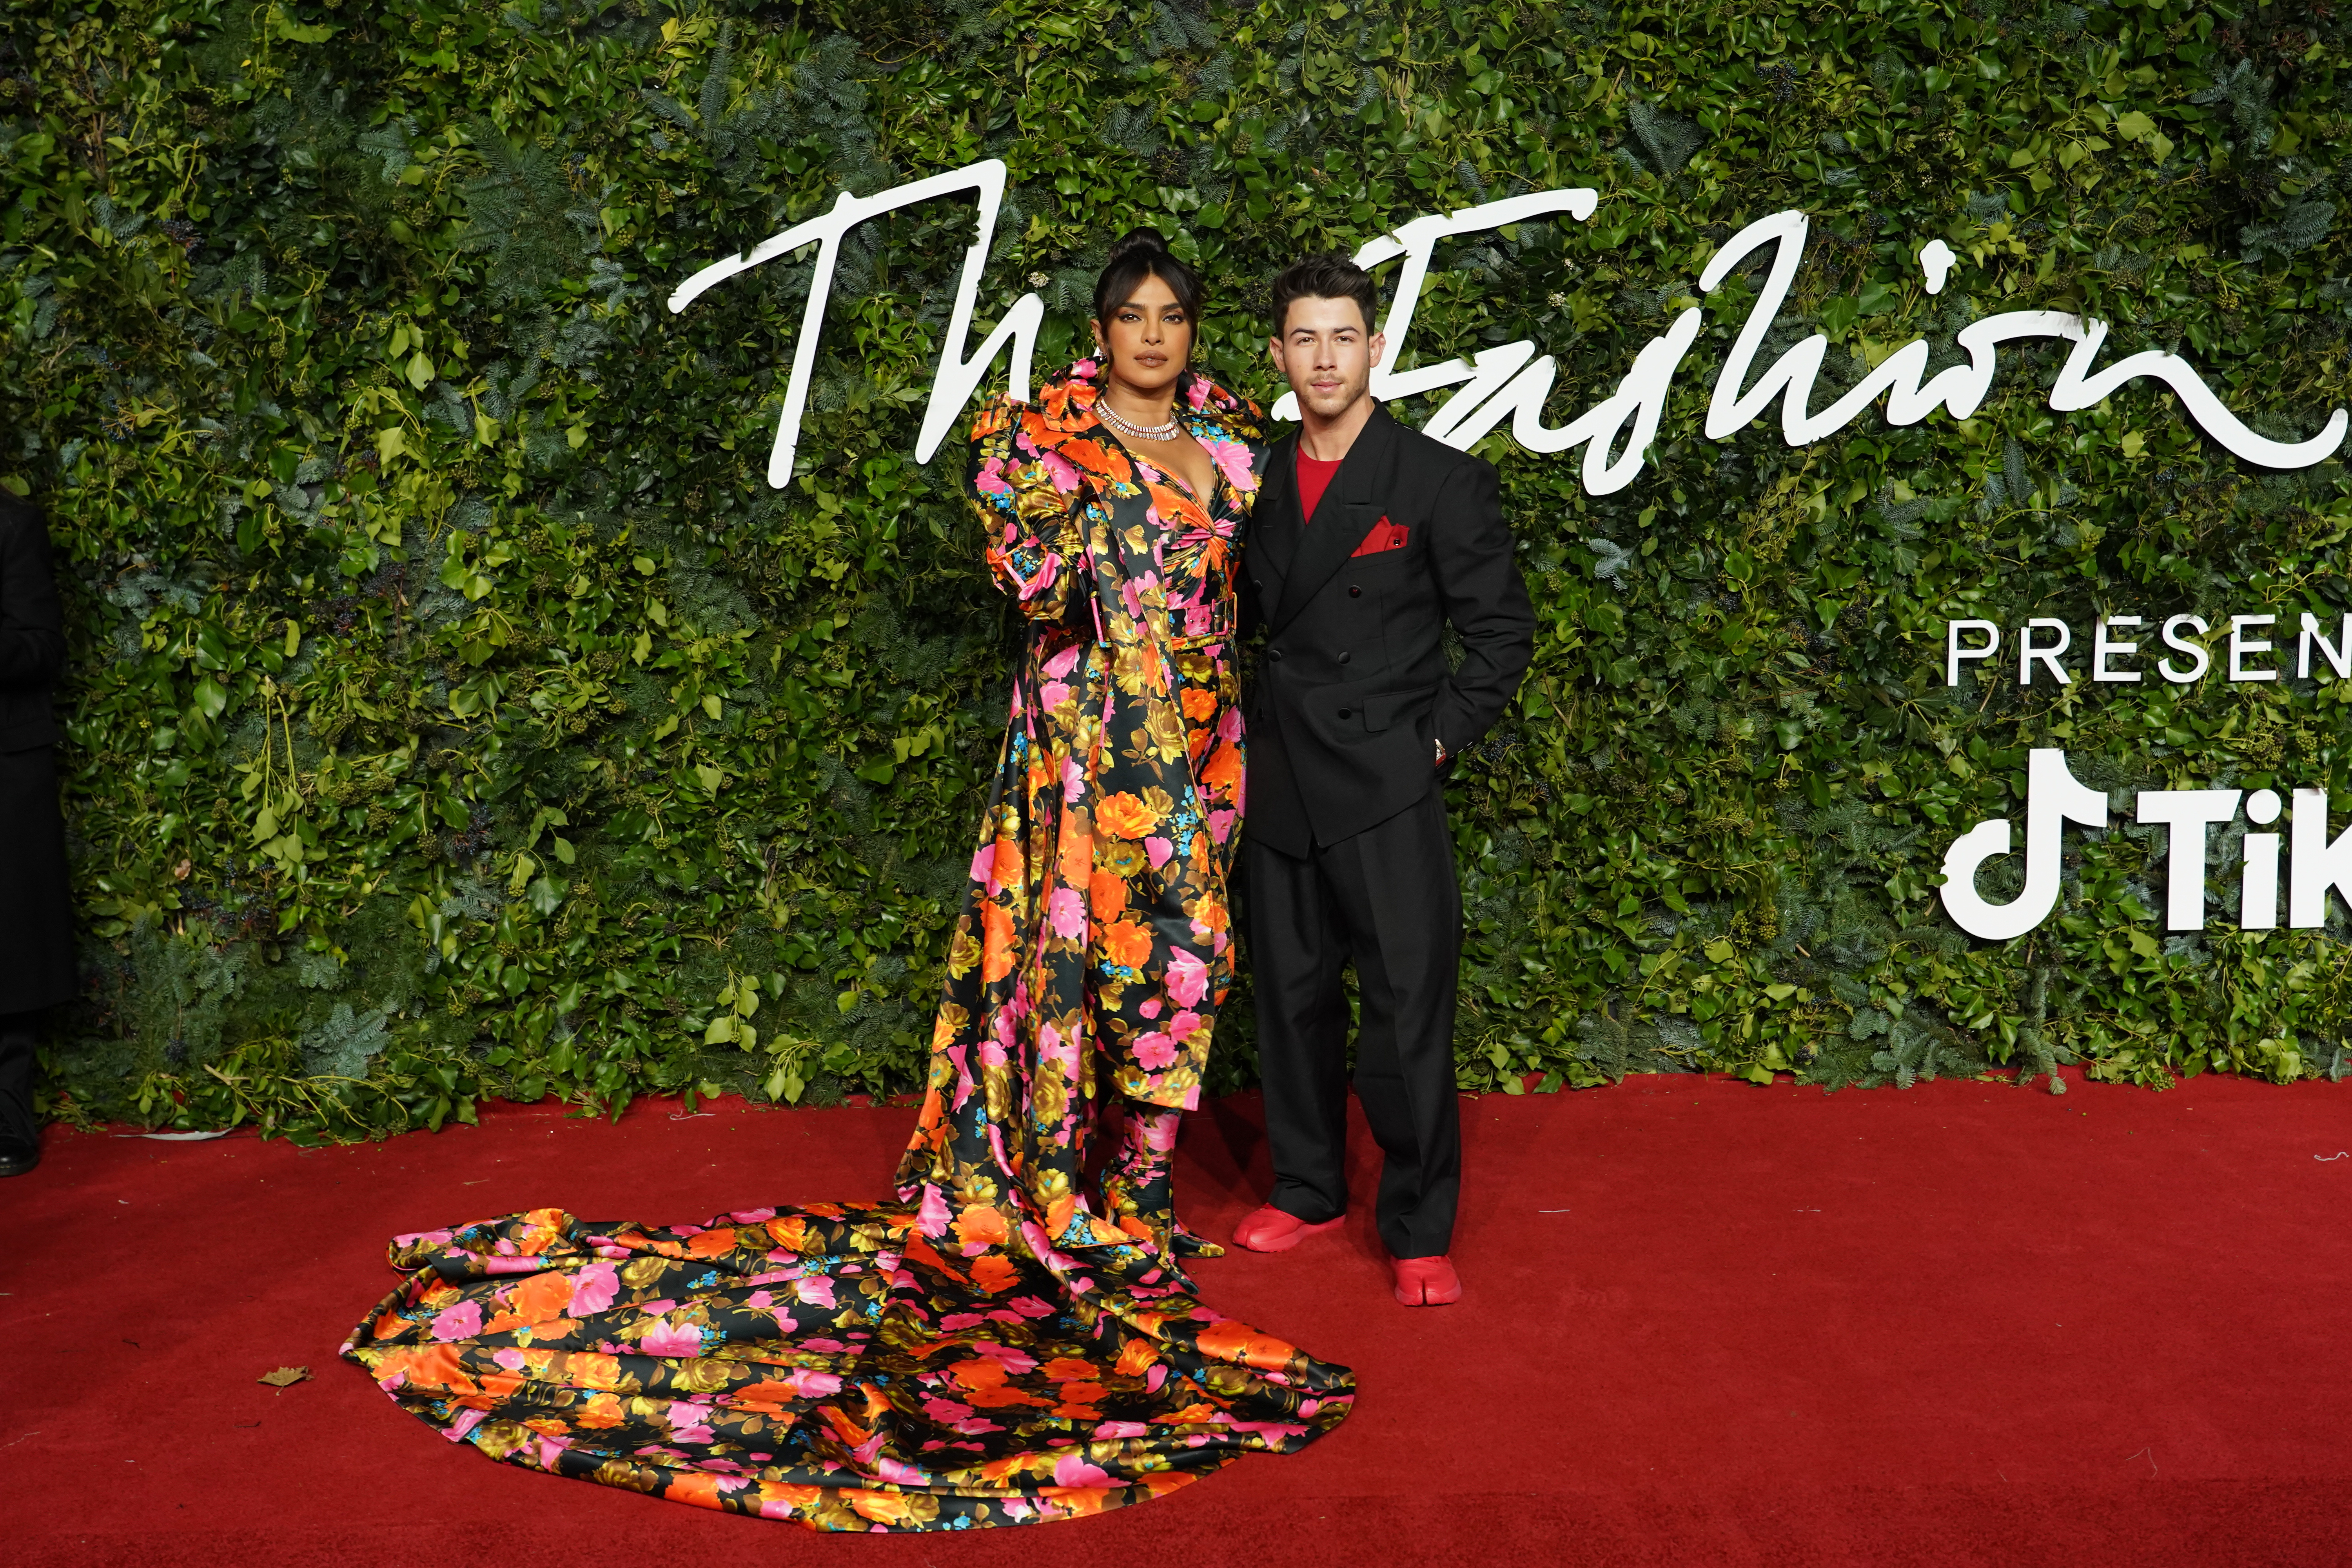 Nick Jonas and Priyanka Chopra attending the Fashion Awards 2021